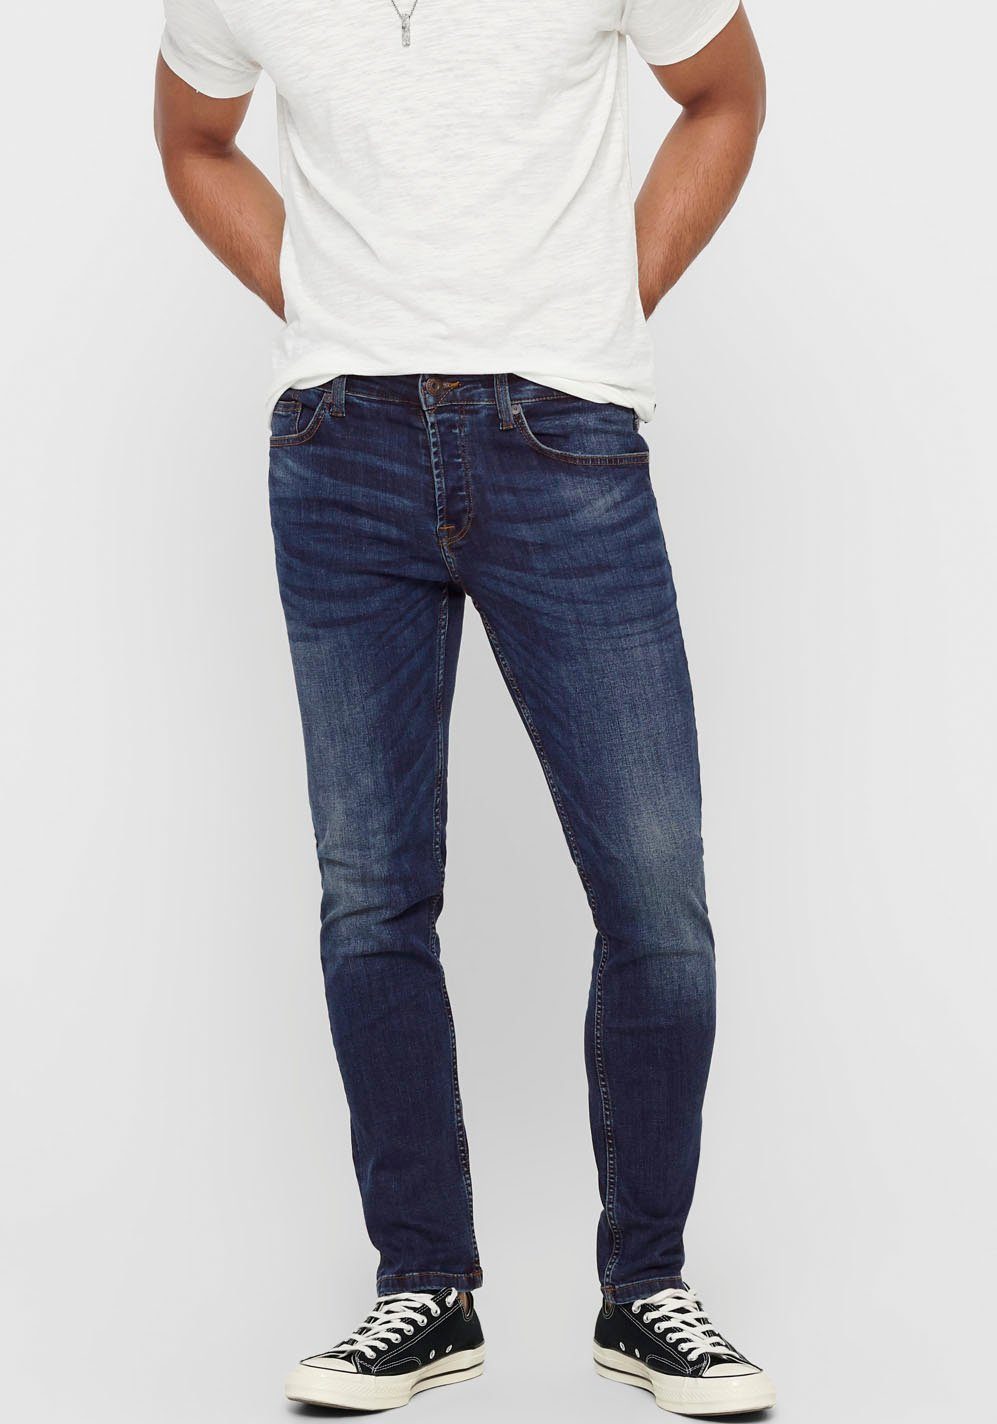 VD ONSWEFT Denim JEANS SONS Slim-fit-Jeans ONLY & REG. 6458 GREY D. Blue Dark